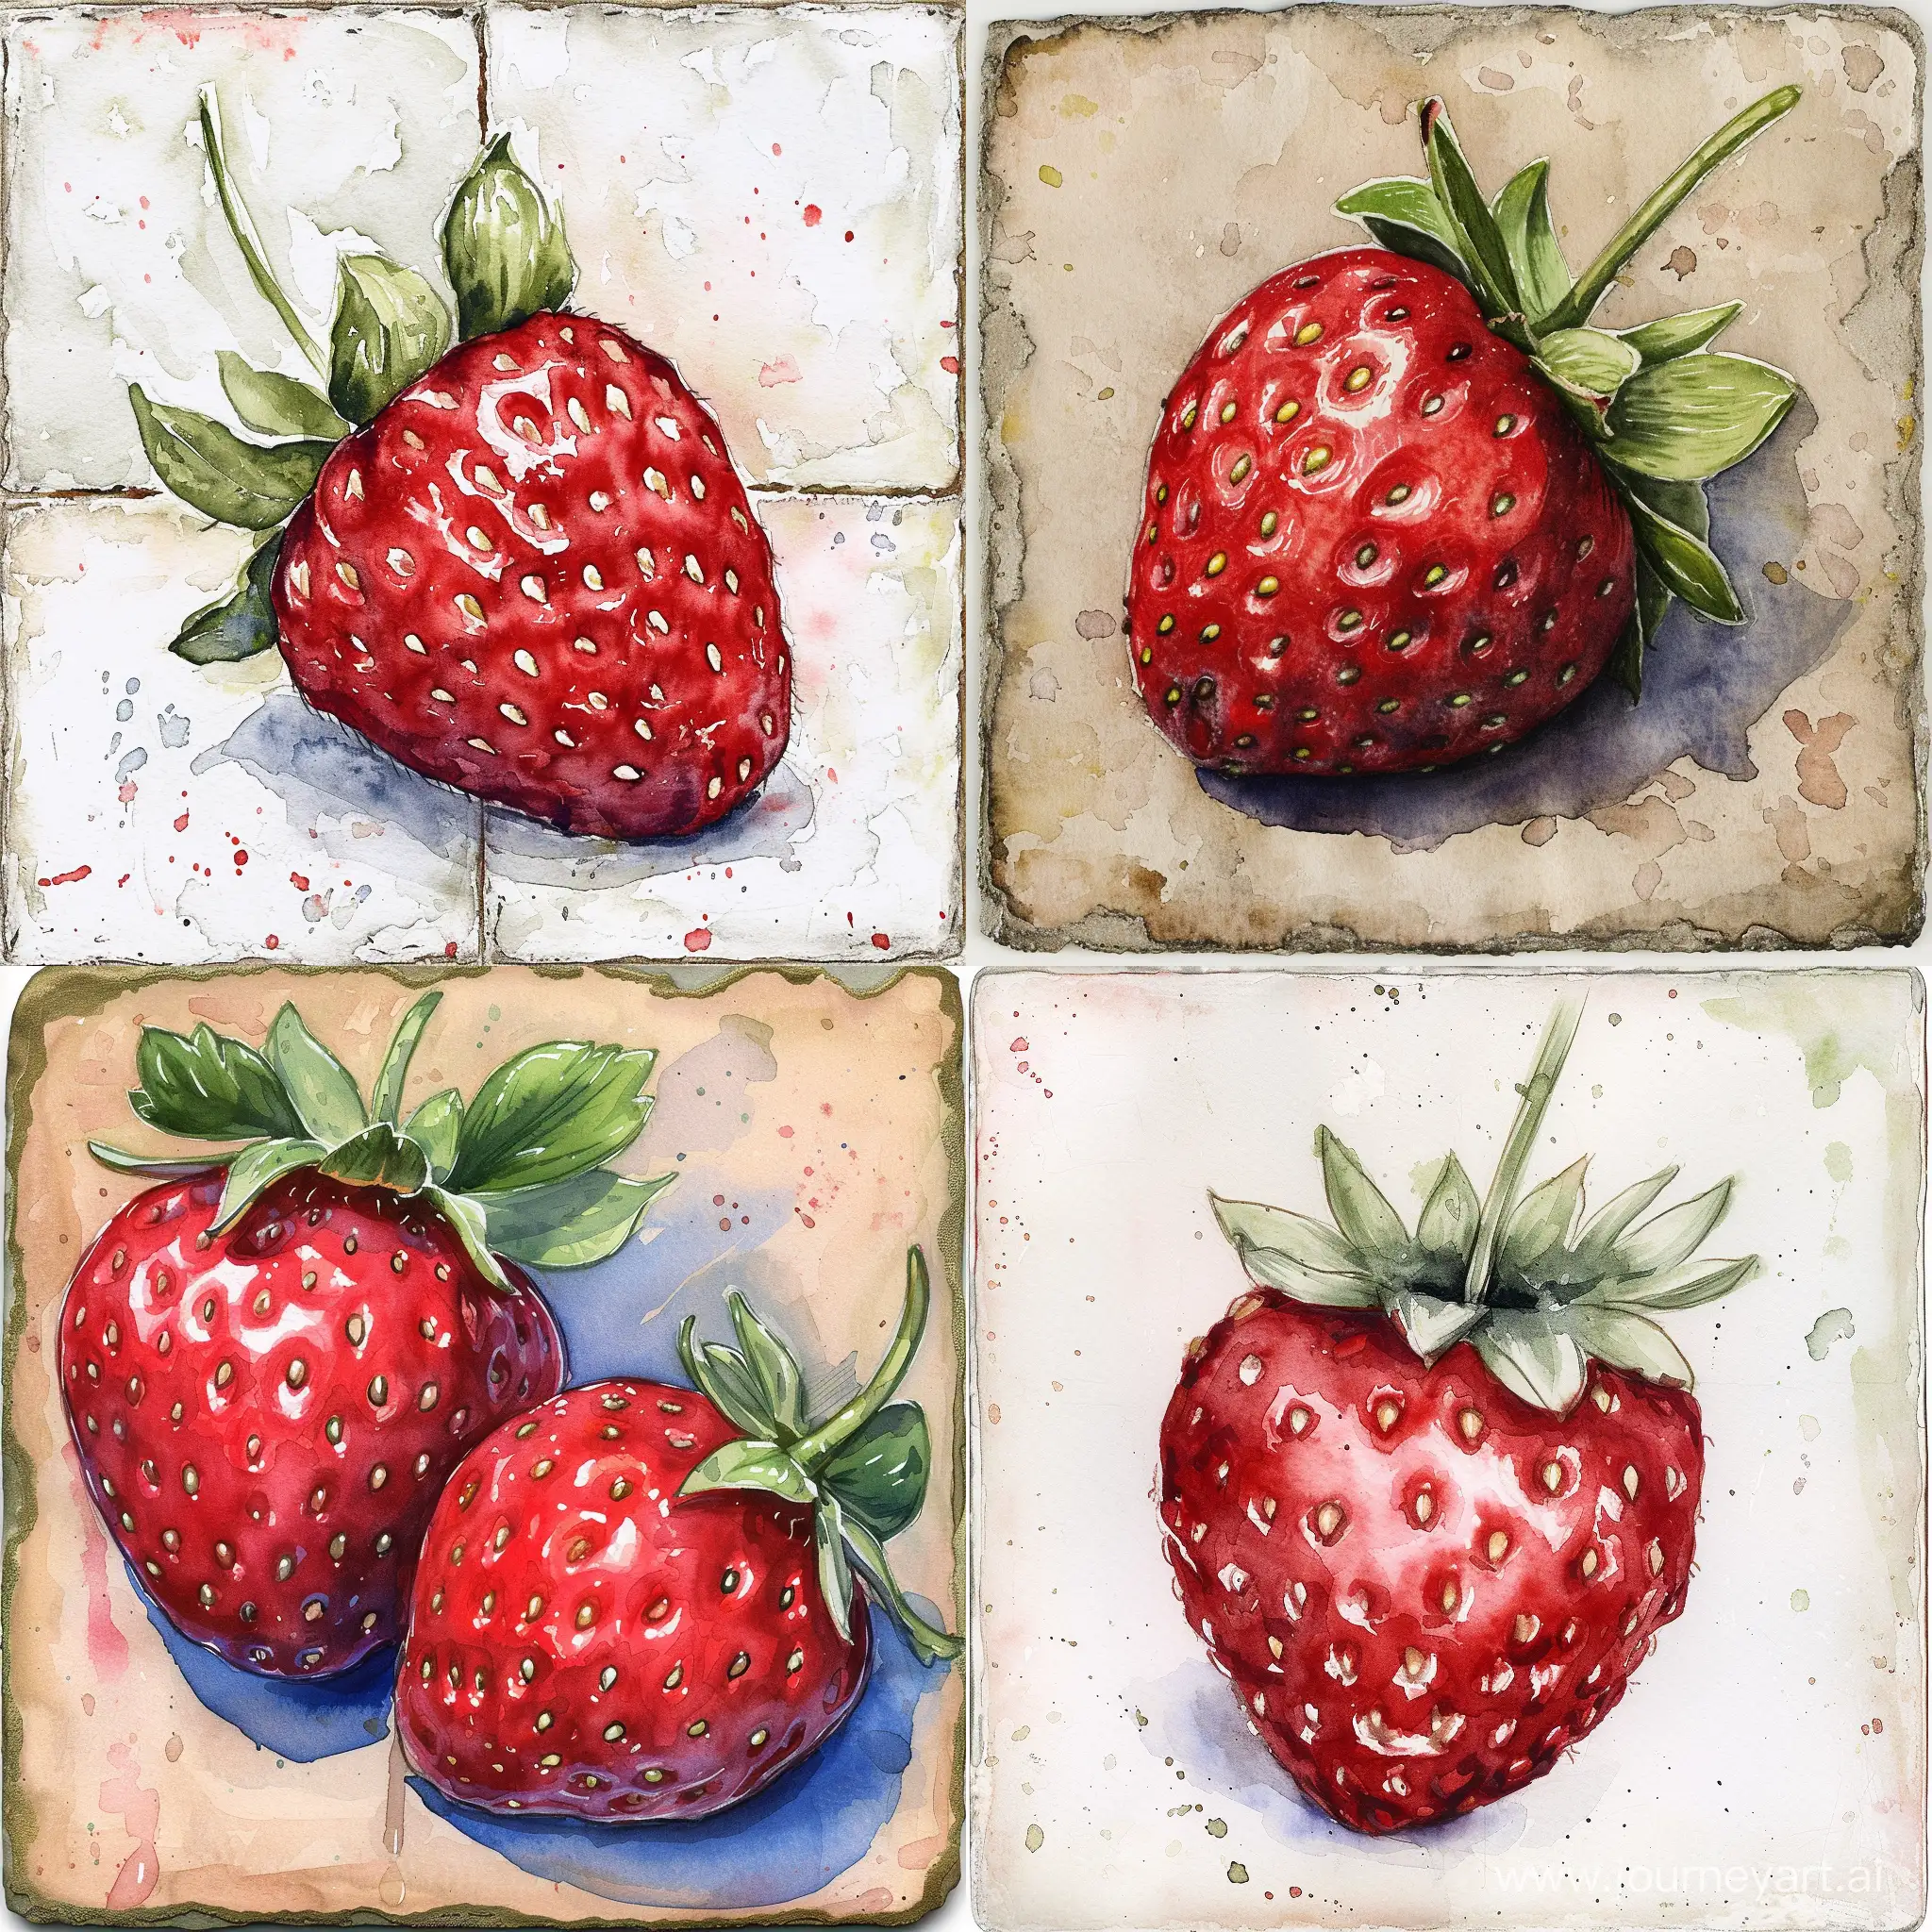 Vibrant-Watercolor-Strawberry-Tile-Art-Botanical-Elegance-in-11-Aspect-Ratio